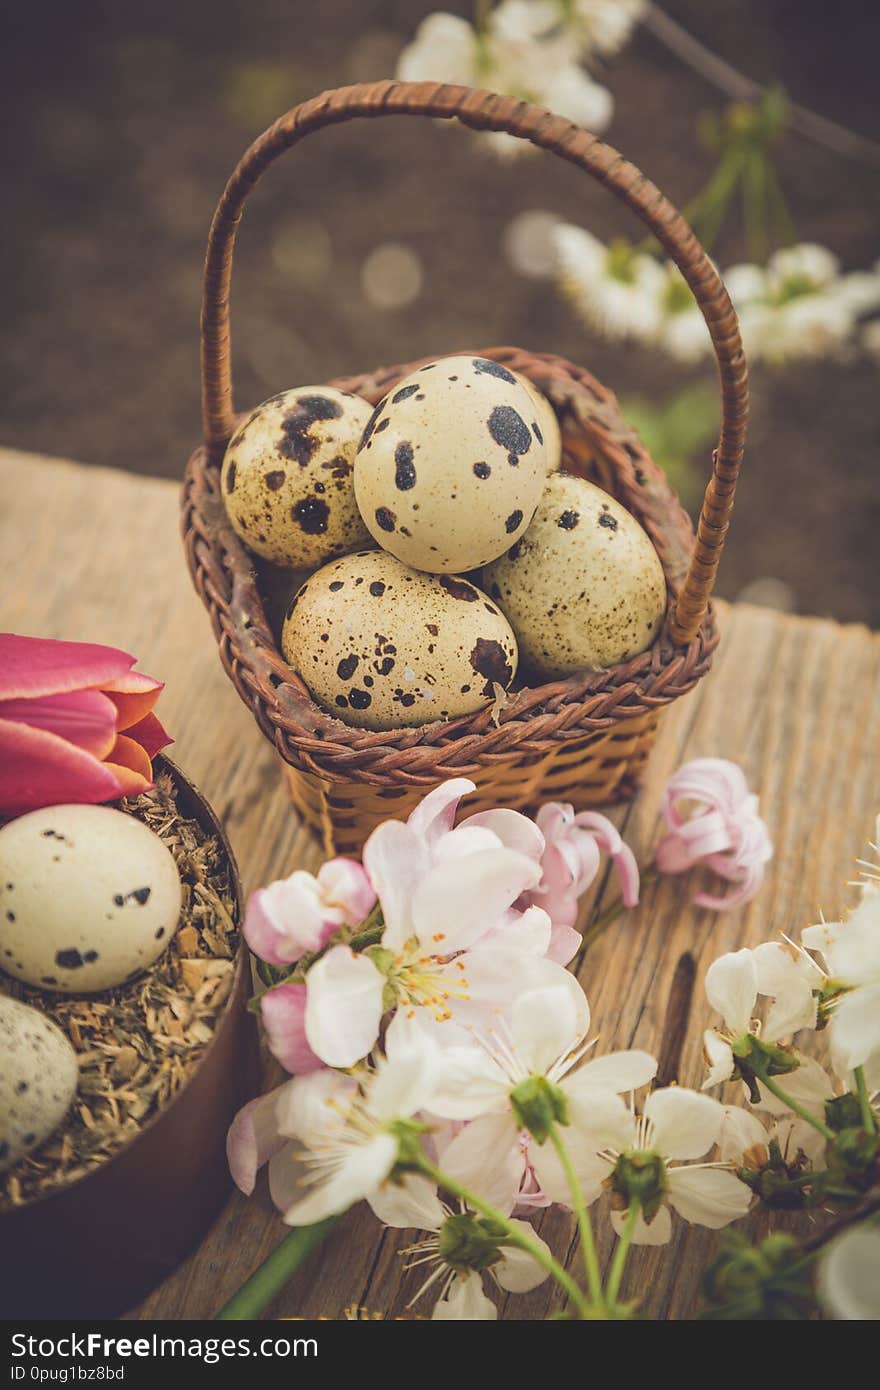 Organic quail eggs. Natural gourmet meal